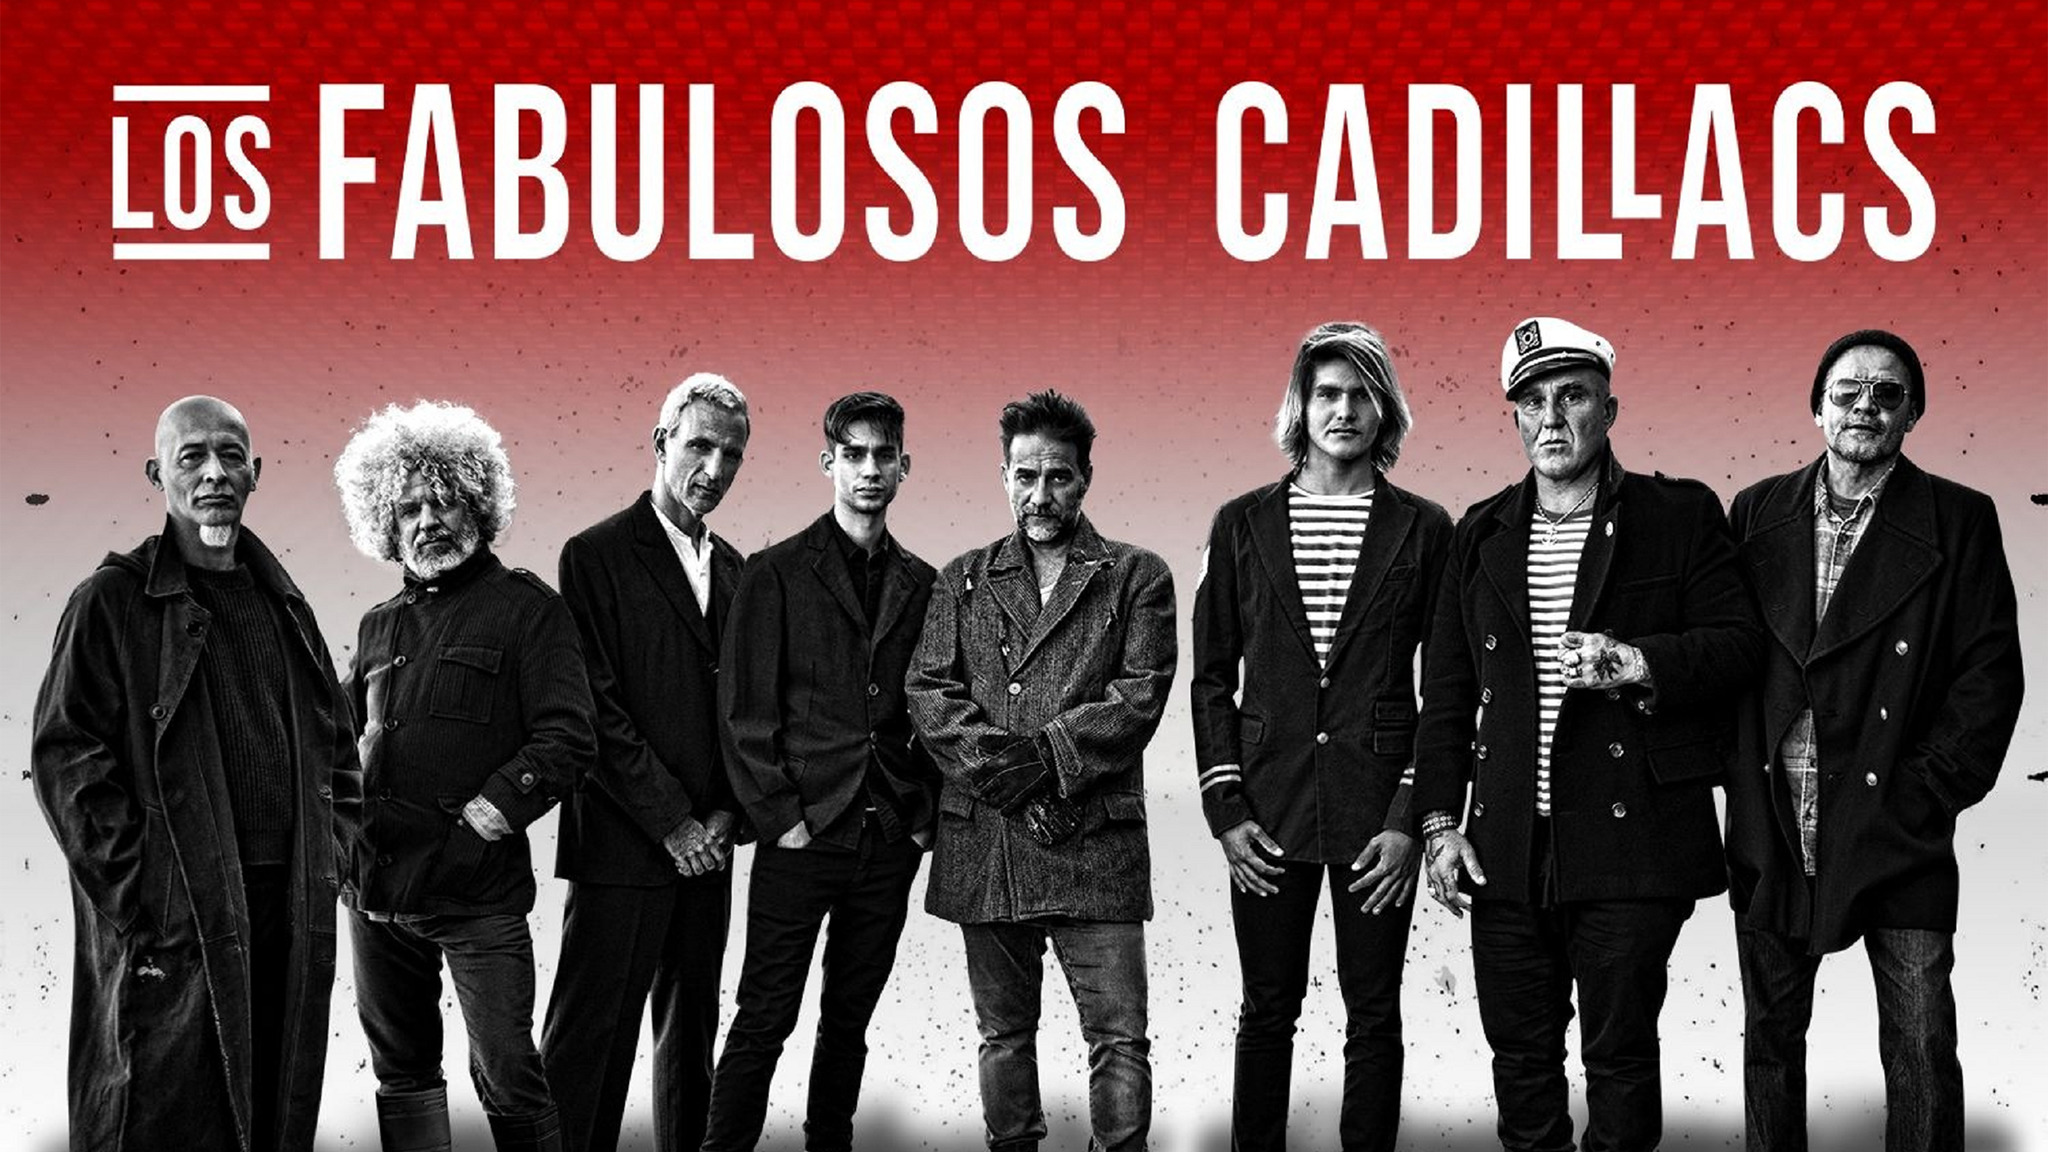 Los Fabulosos Cadillacs Tickets, 20222023 Concert Tour Dates